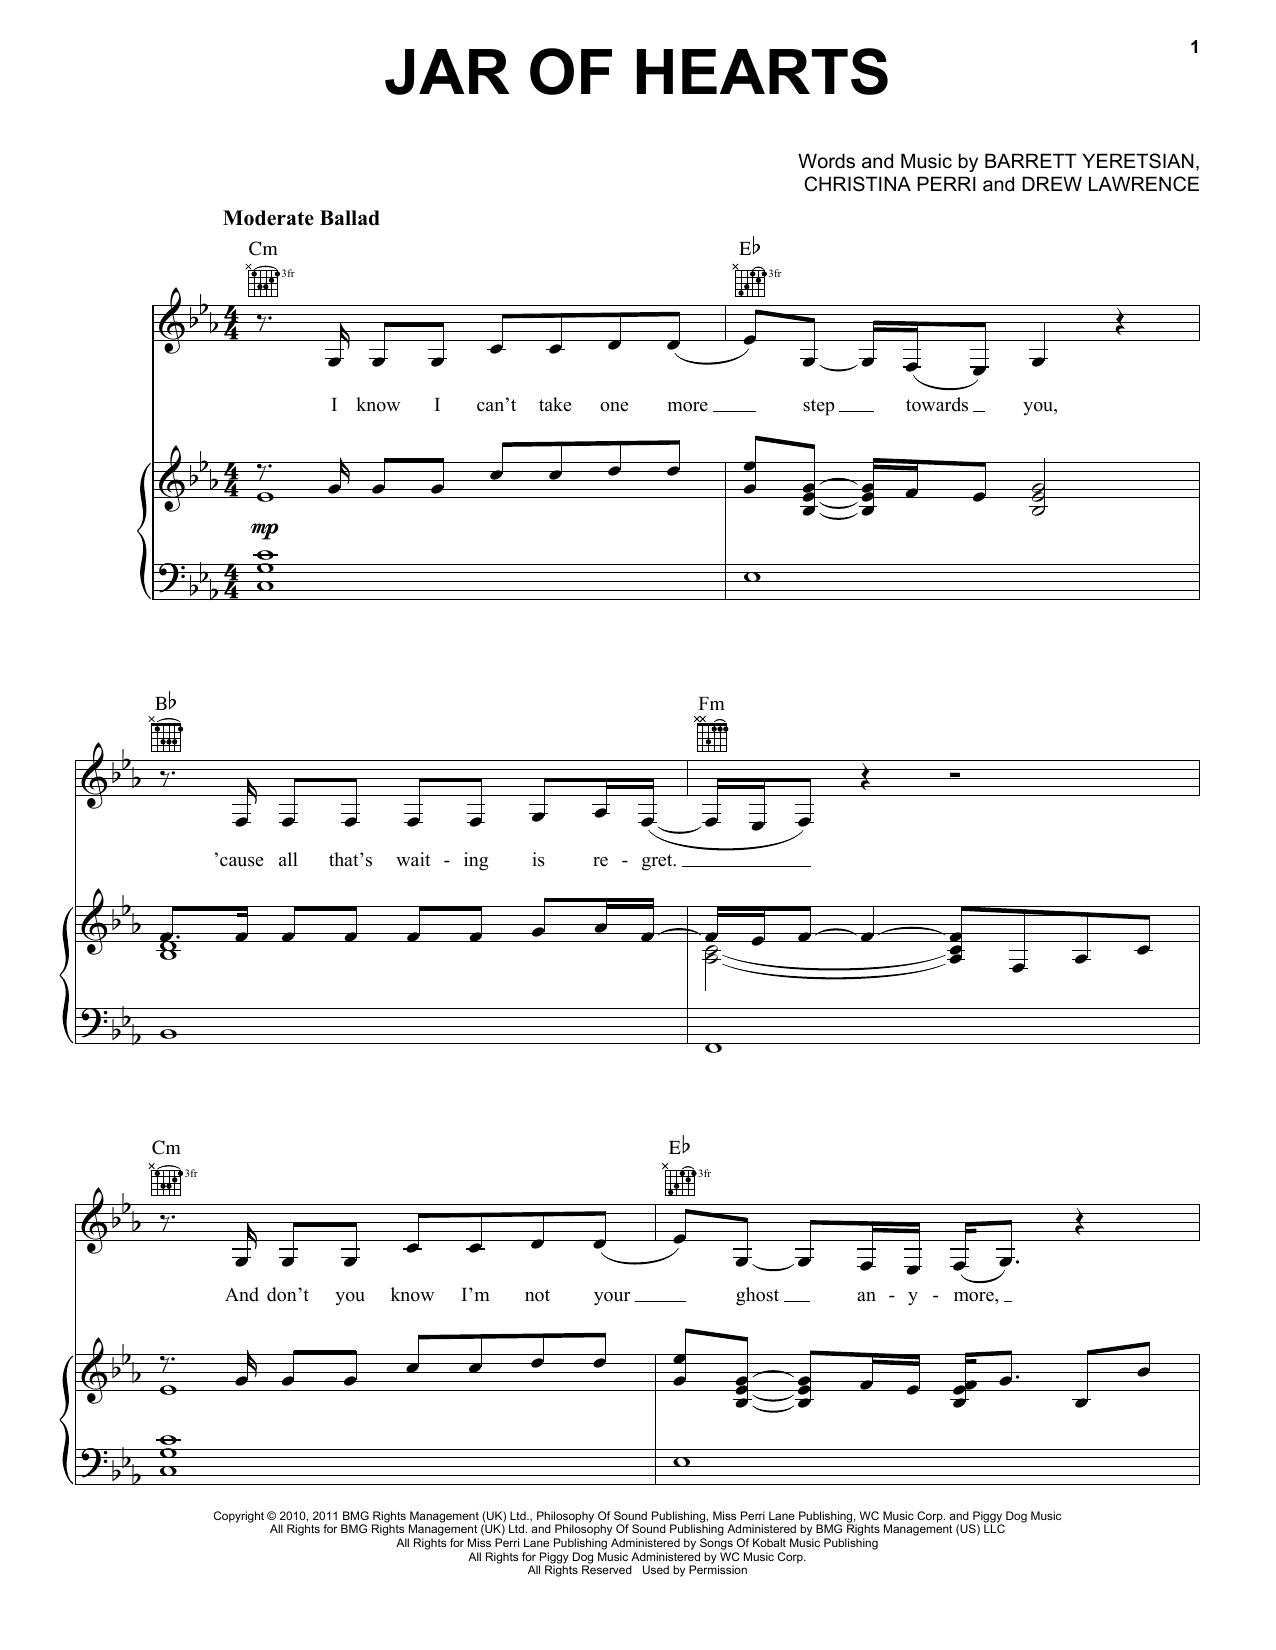 Christina Perri Jar Of Hearts Sheet Music Notes & Chords for Piano (Big Notes) - Download or Print PDF